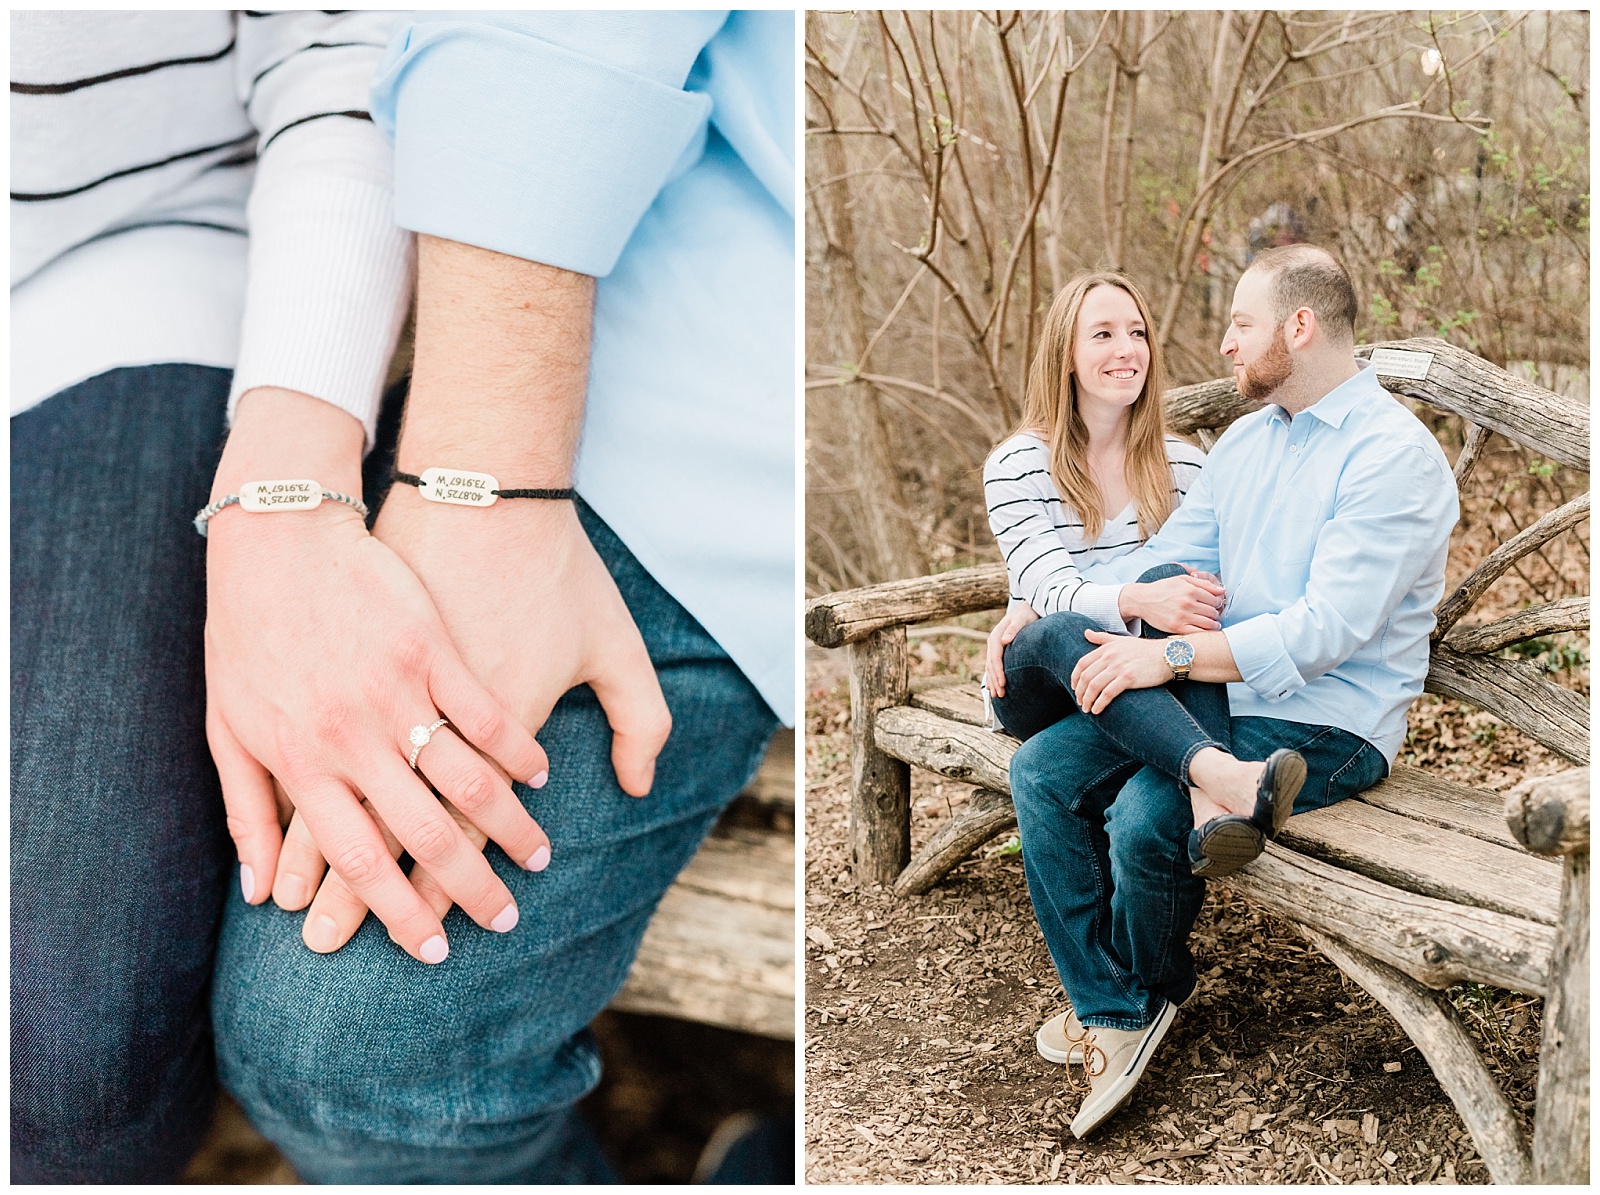 Central Park, NYC engagement session, springtime, wedding photographer, New York, hands, bracelet, coordinates, engaged